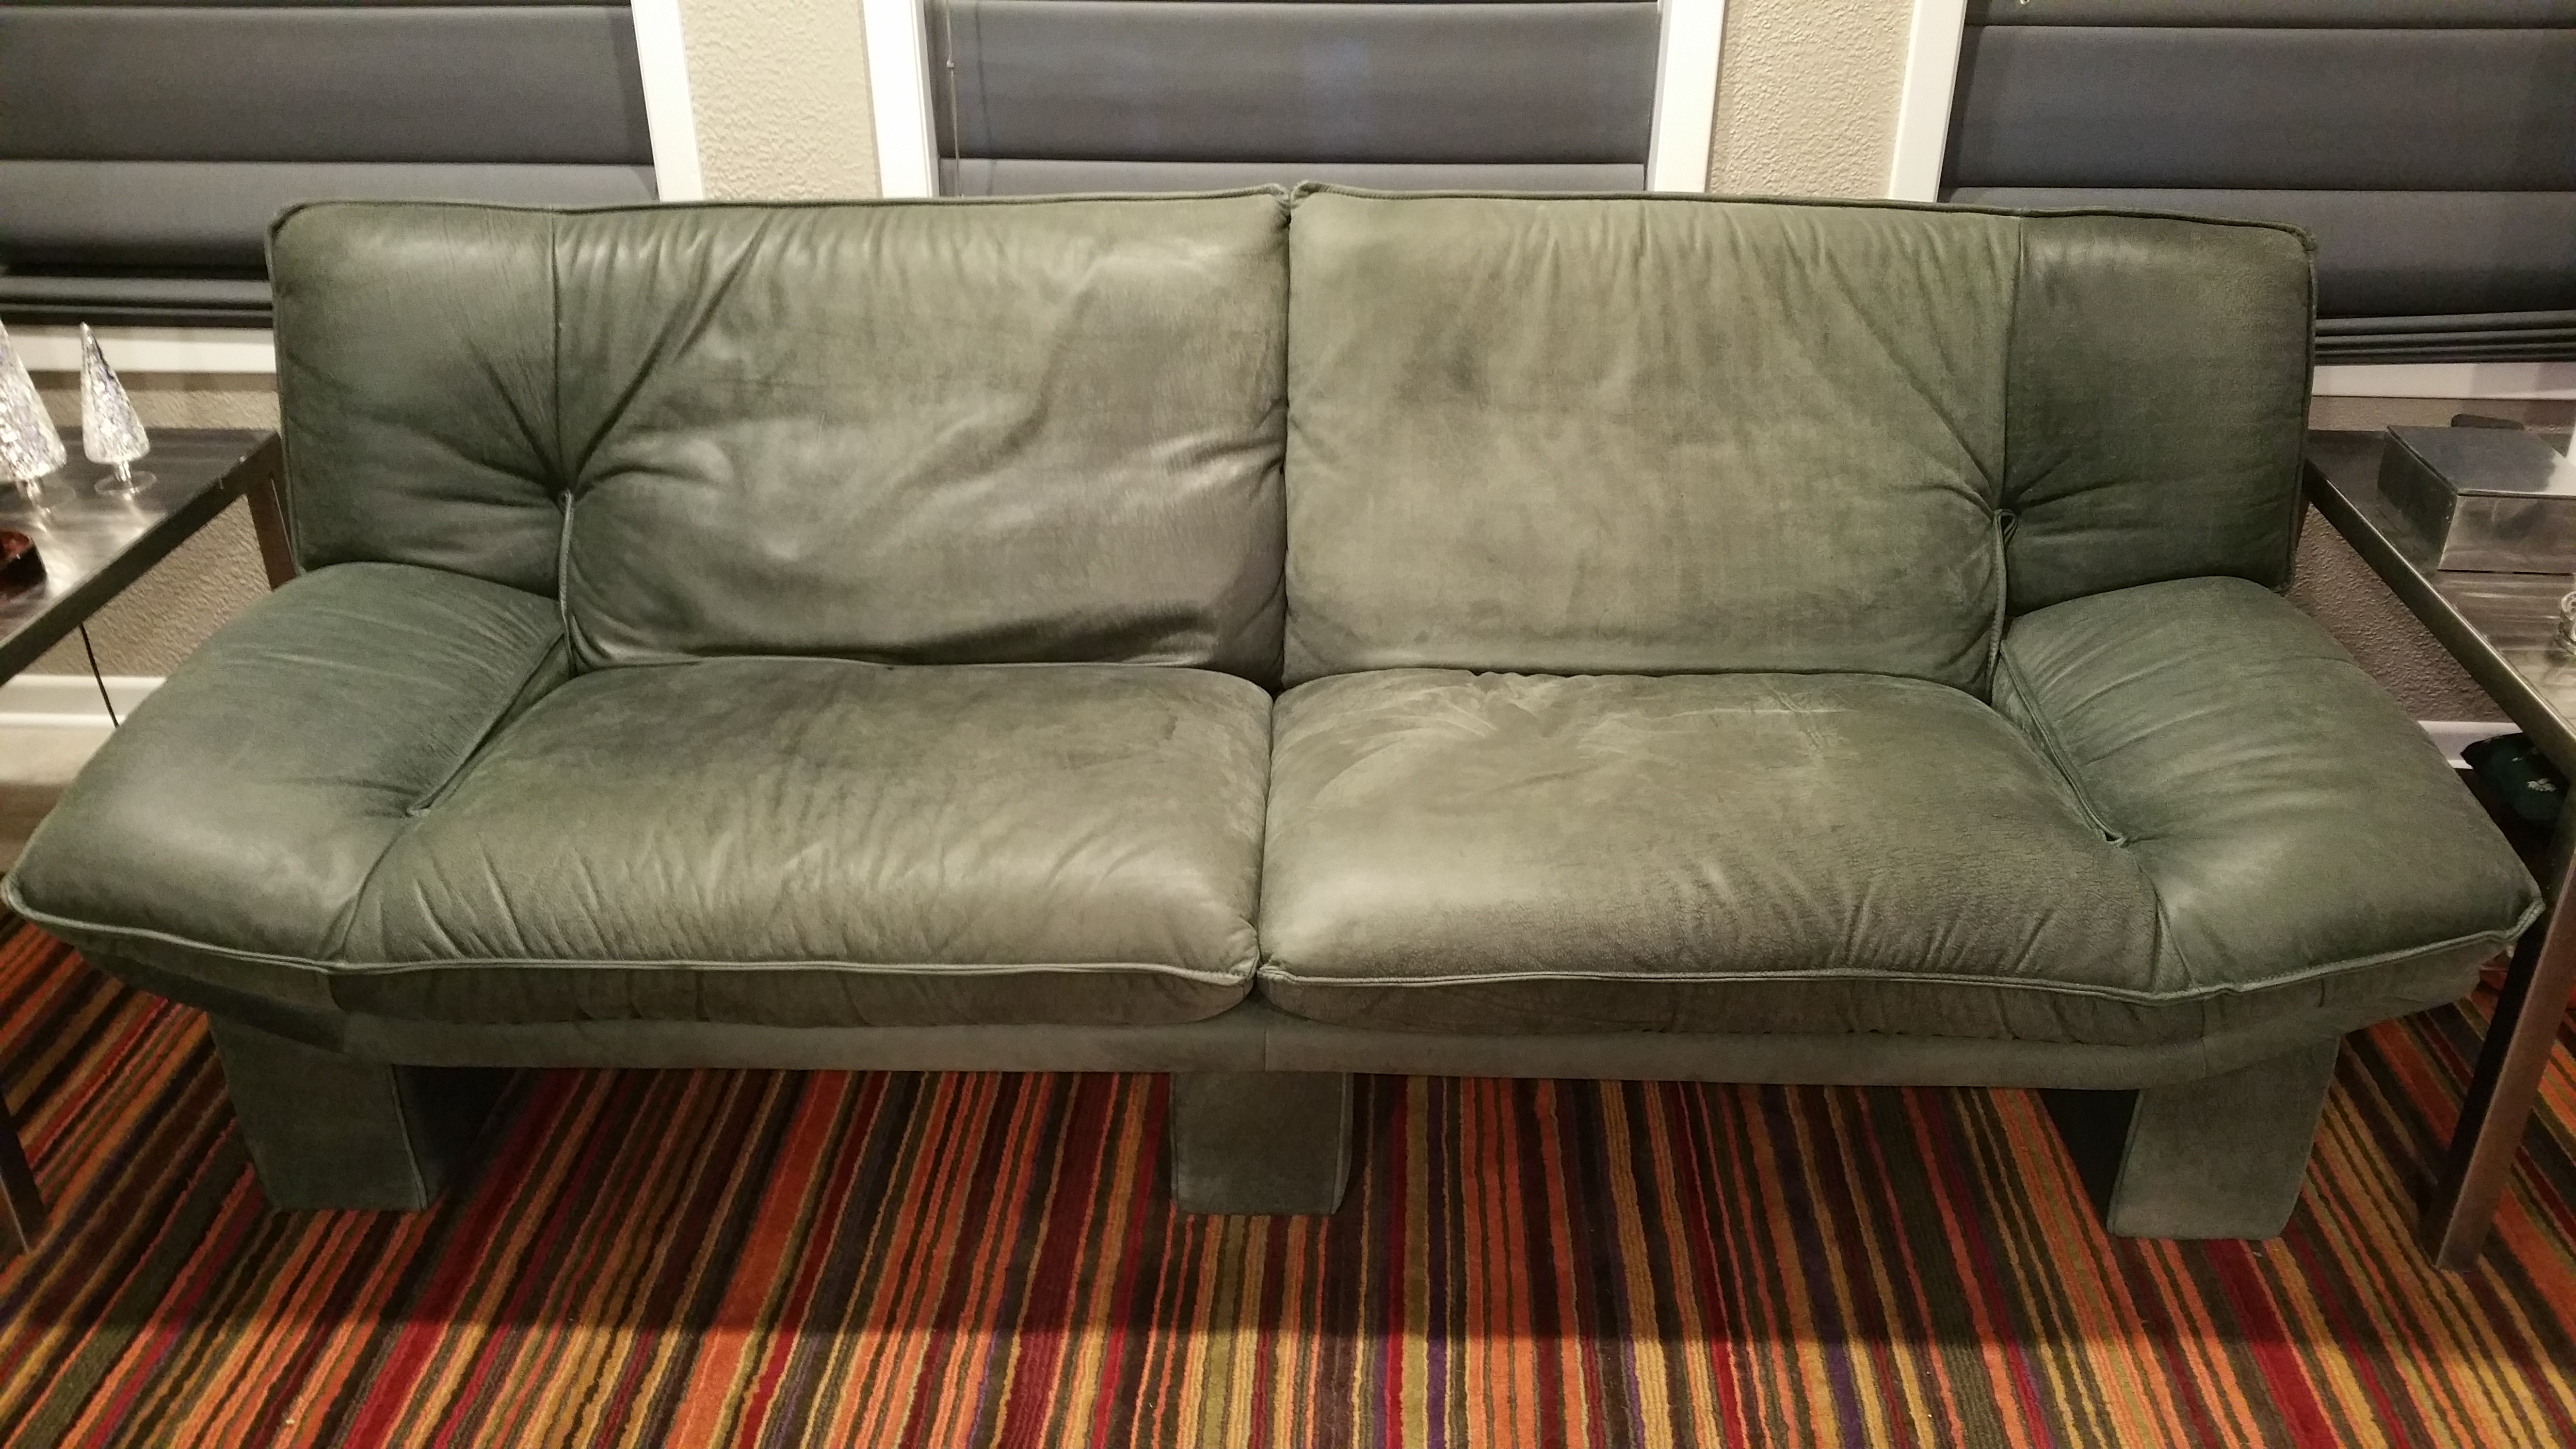 Urine Stain On Italian Nubuck Leather Sofa, How To Protect Nubuck Leather Sofa